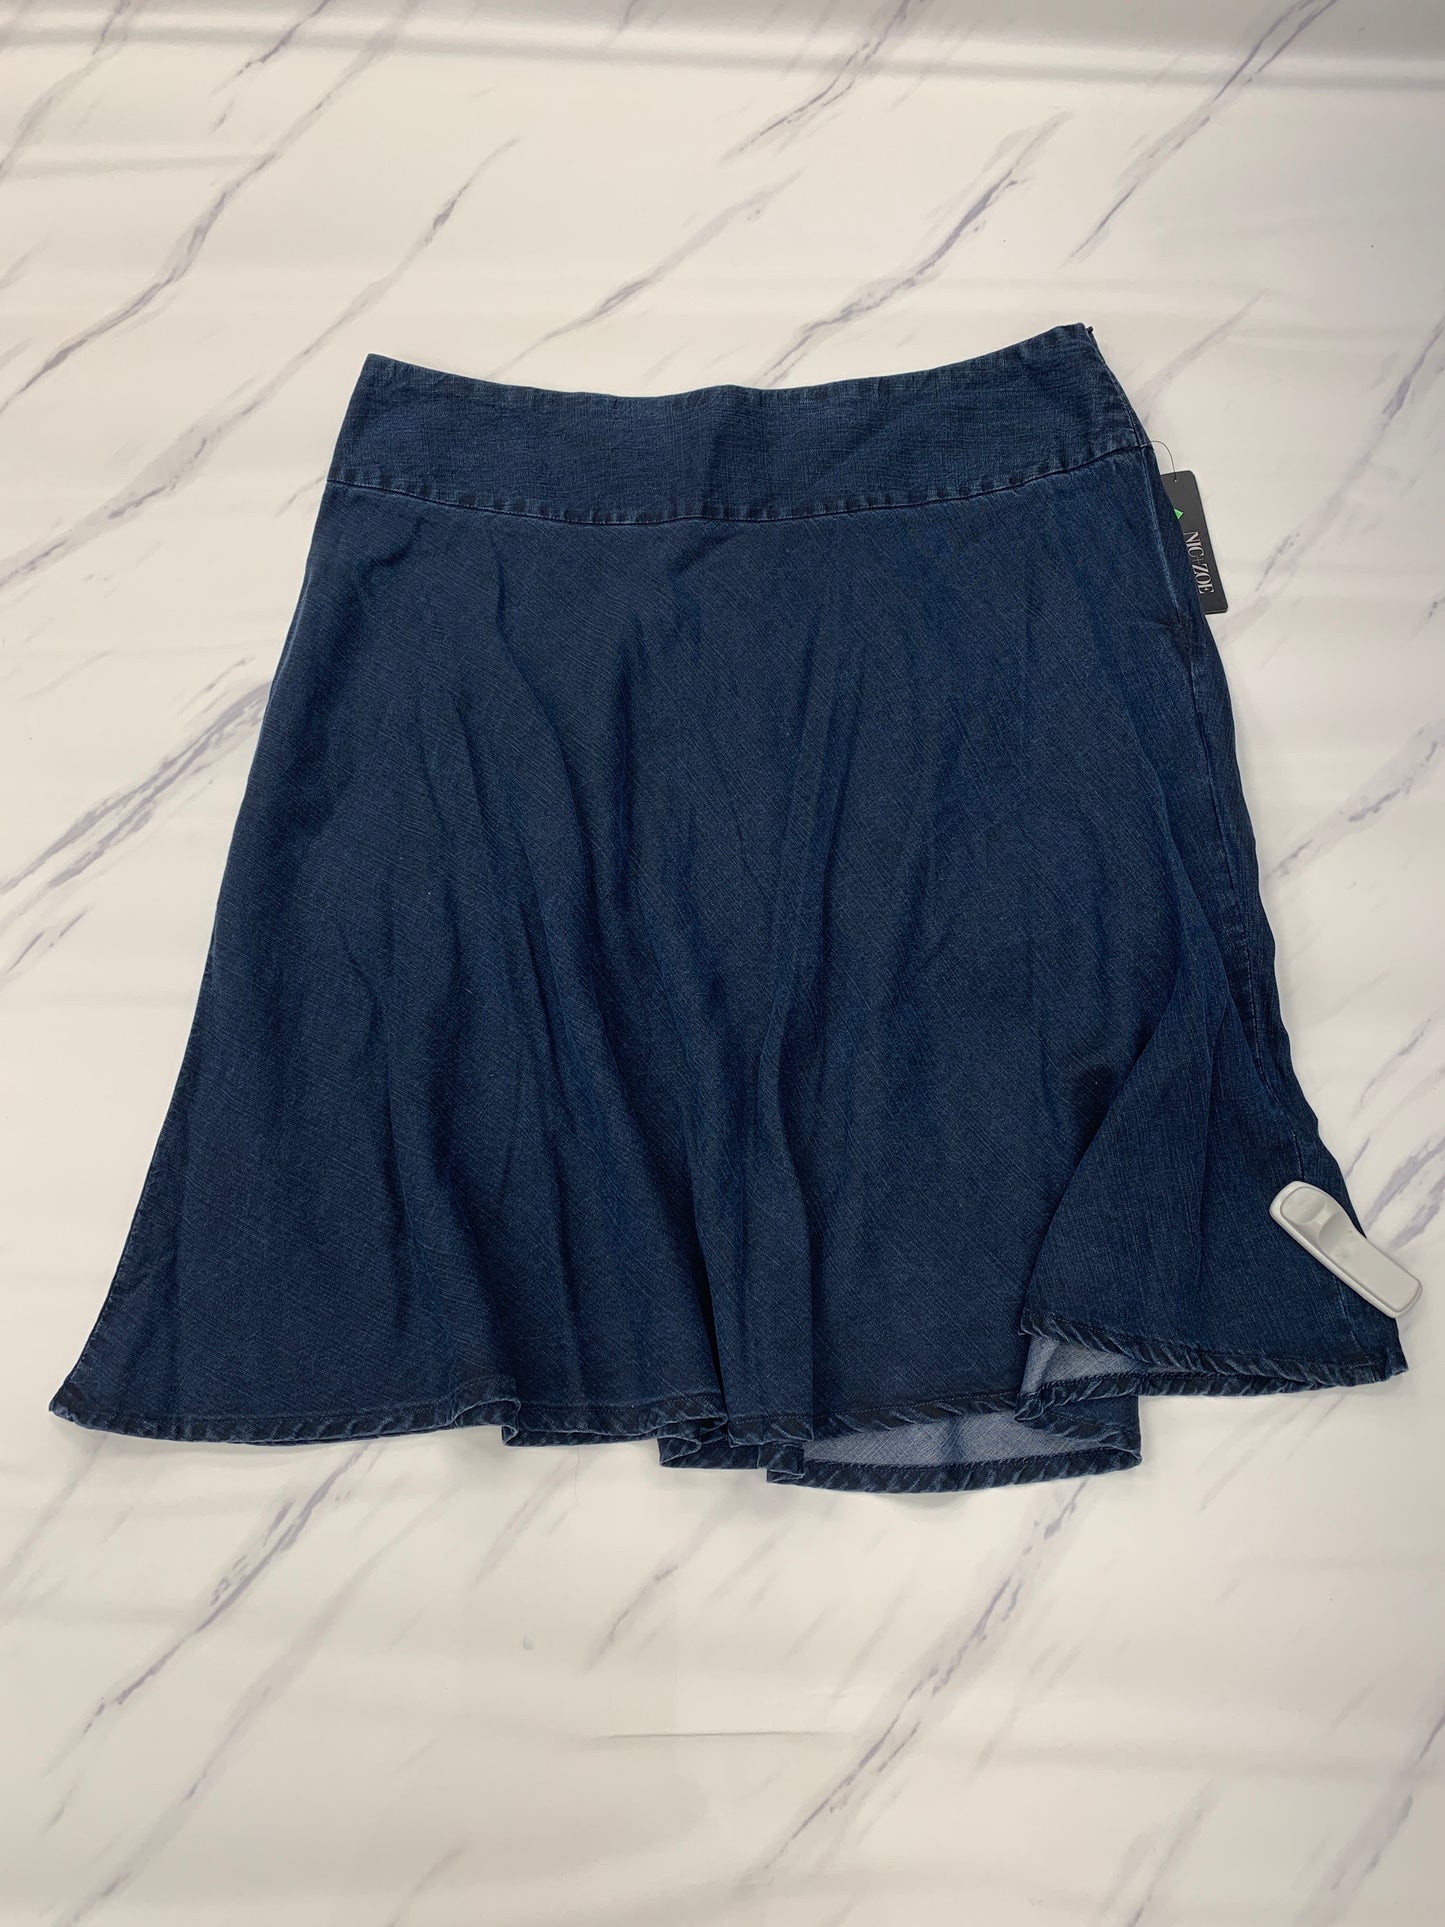 Skirt Midi By Nic + Zoe  Size: 18